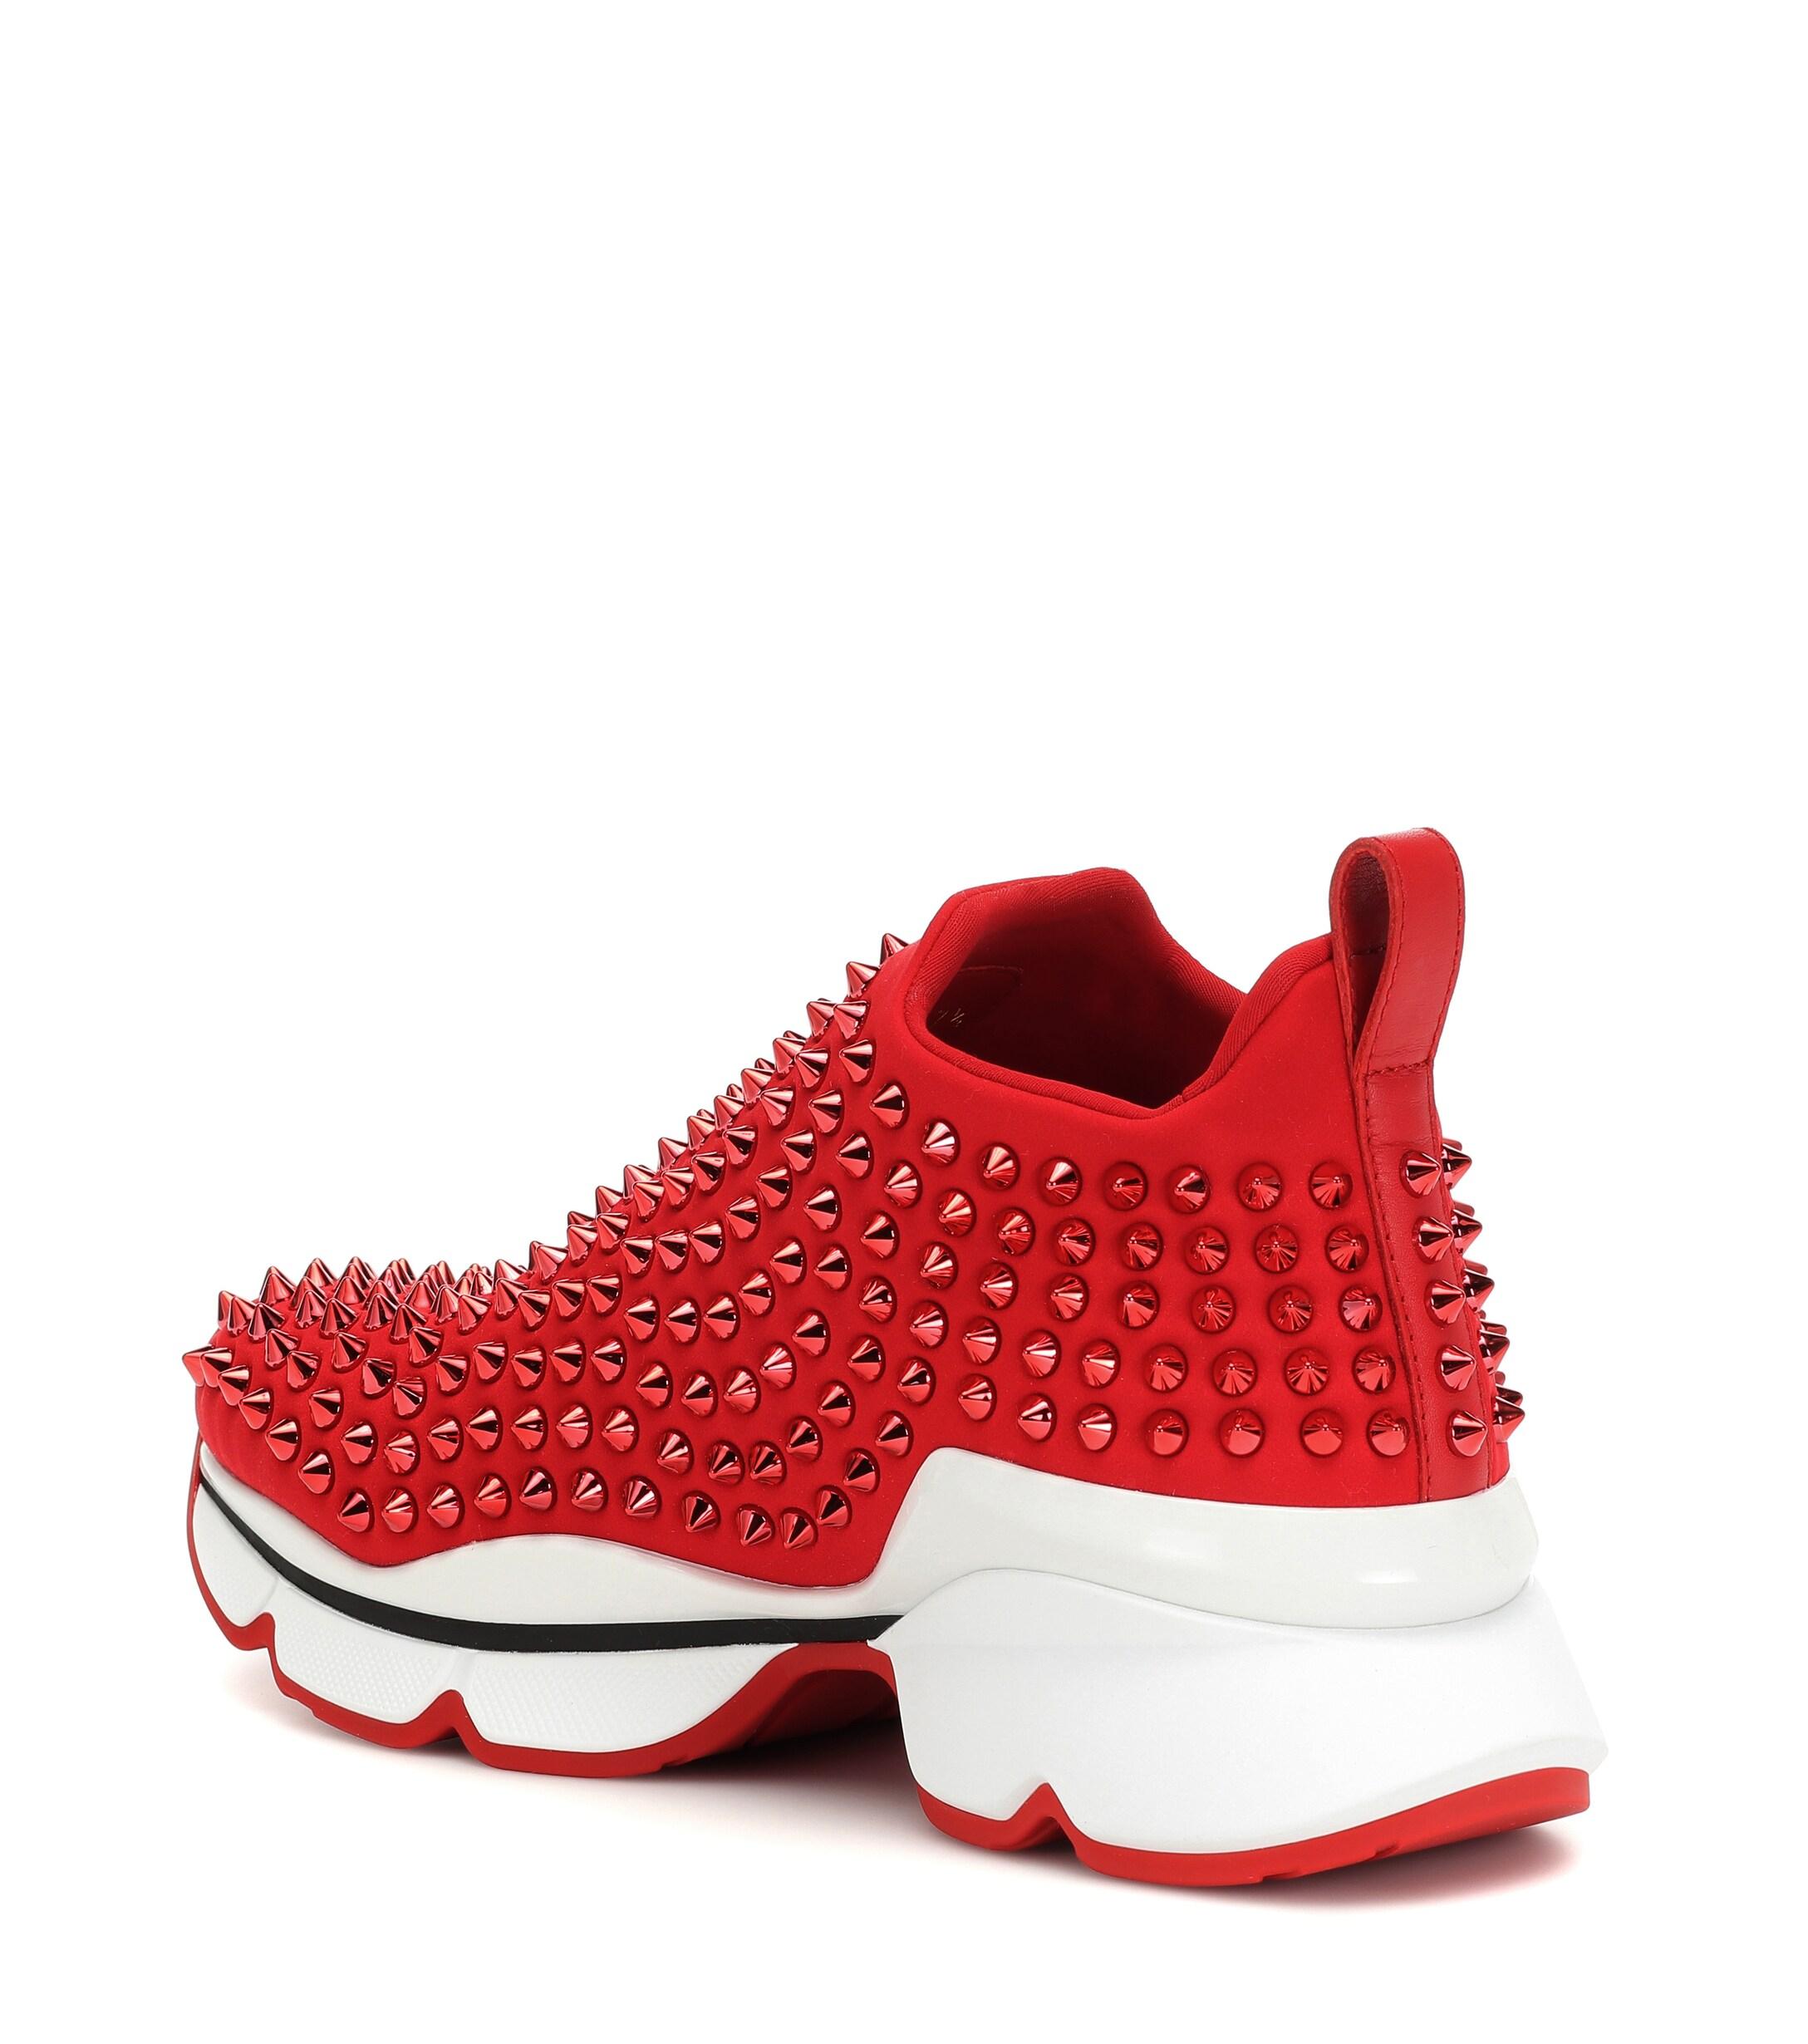 Christian Louboutin Rubber Spike Sock Sneakers in Red | Lyst